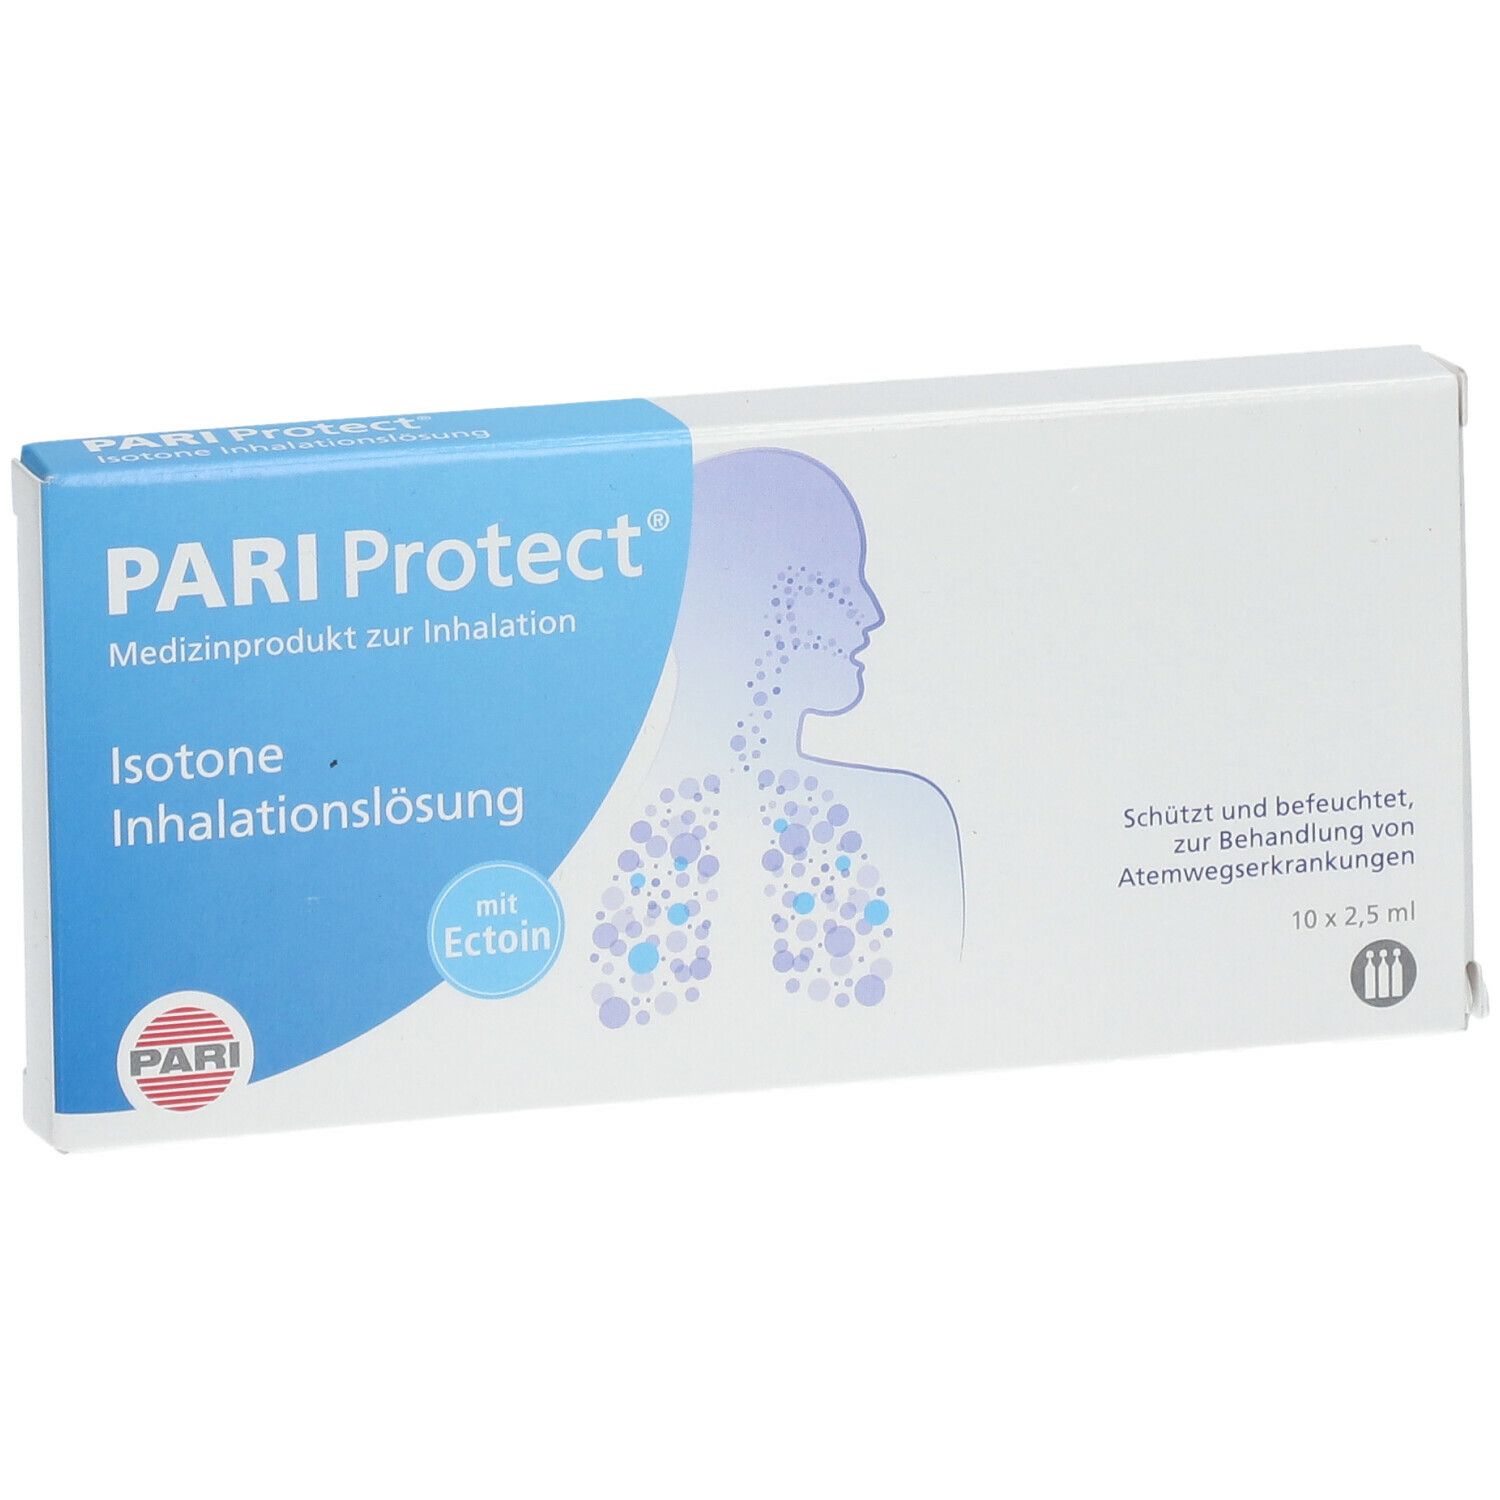 PARI ProtECT Inhalationslösung